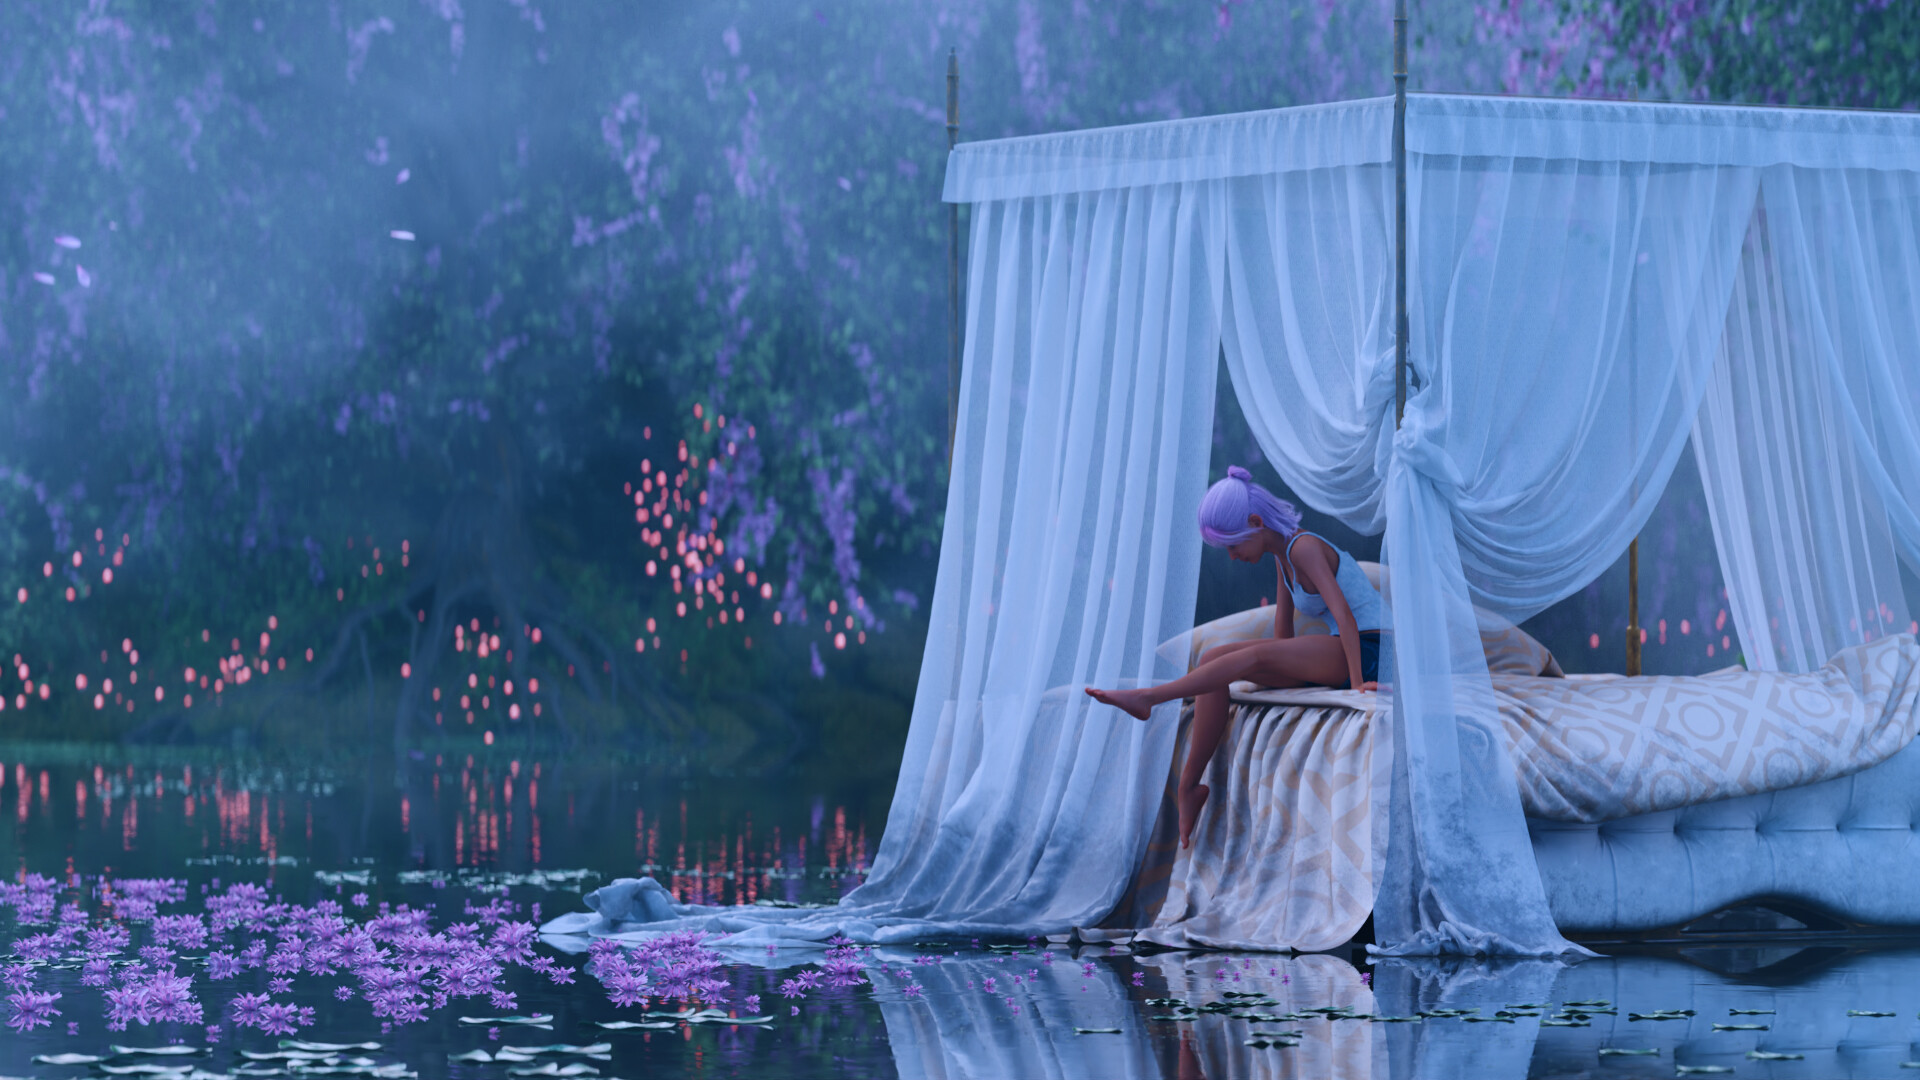 Michael Johnson Artwork Digital Art Women Bed Fantasy Art Fantasy Girl Sitting Reflection Water 1920x1080